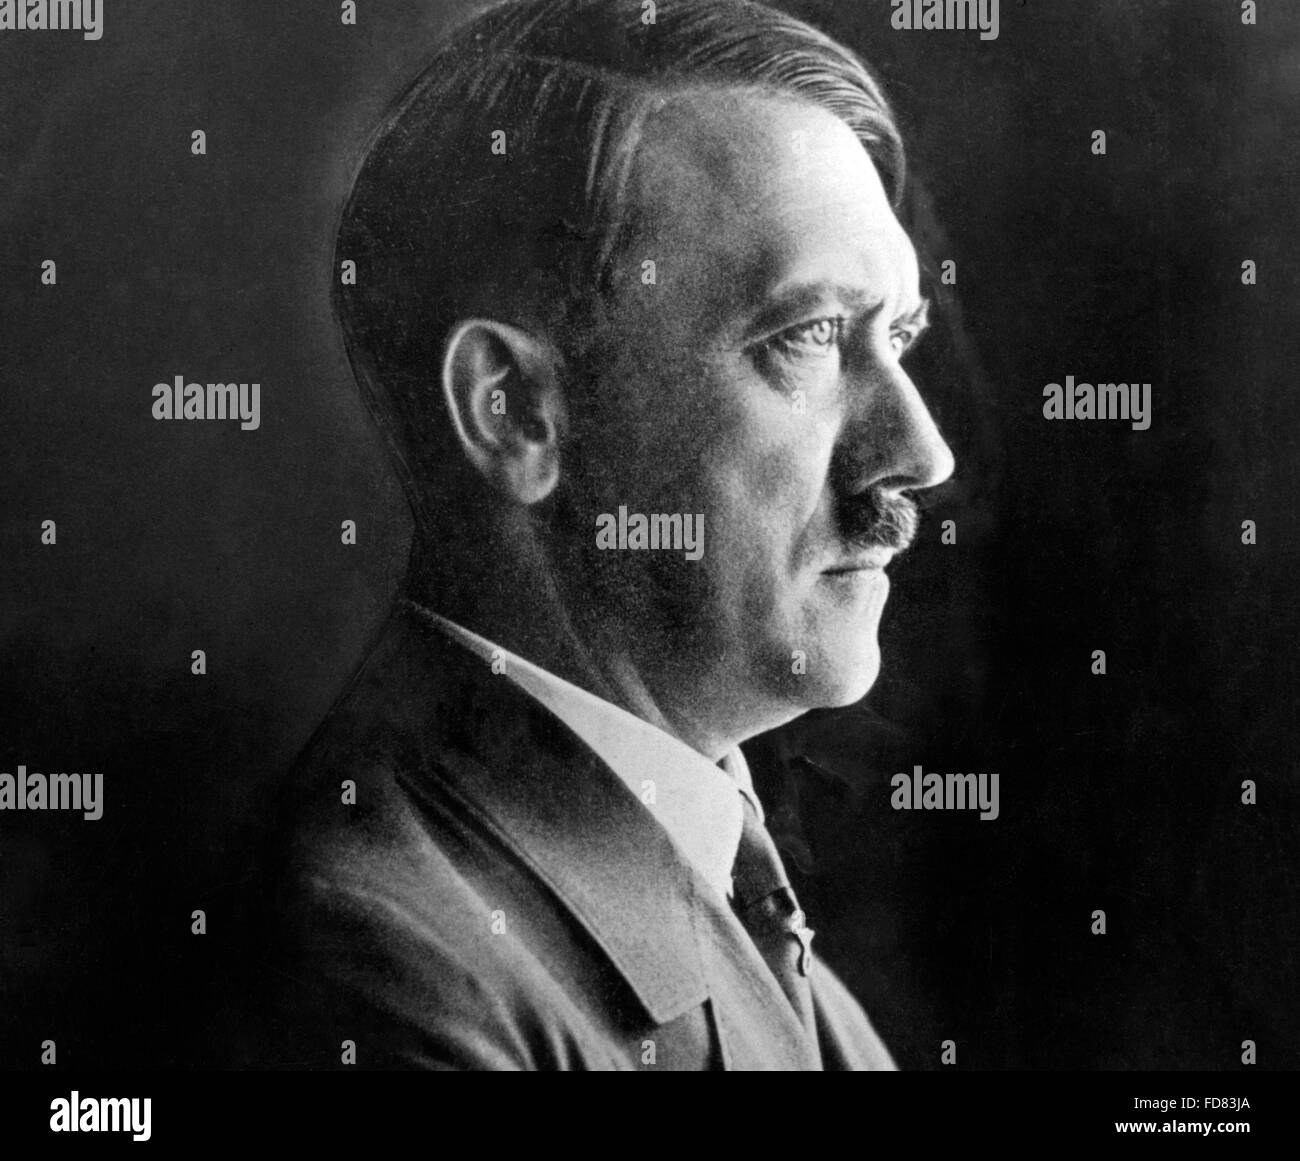 Profile portrait of Adolf Hitler, 1938 Stock Photo